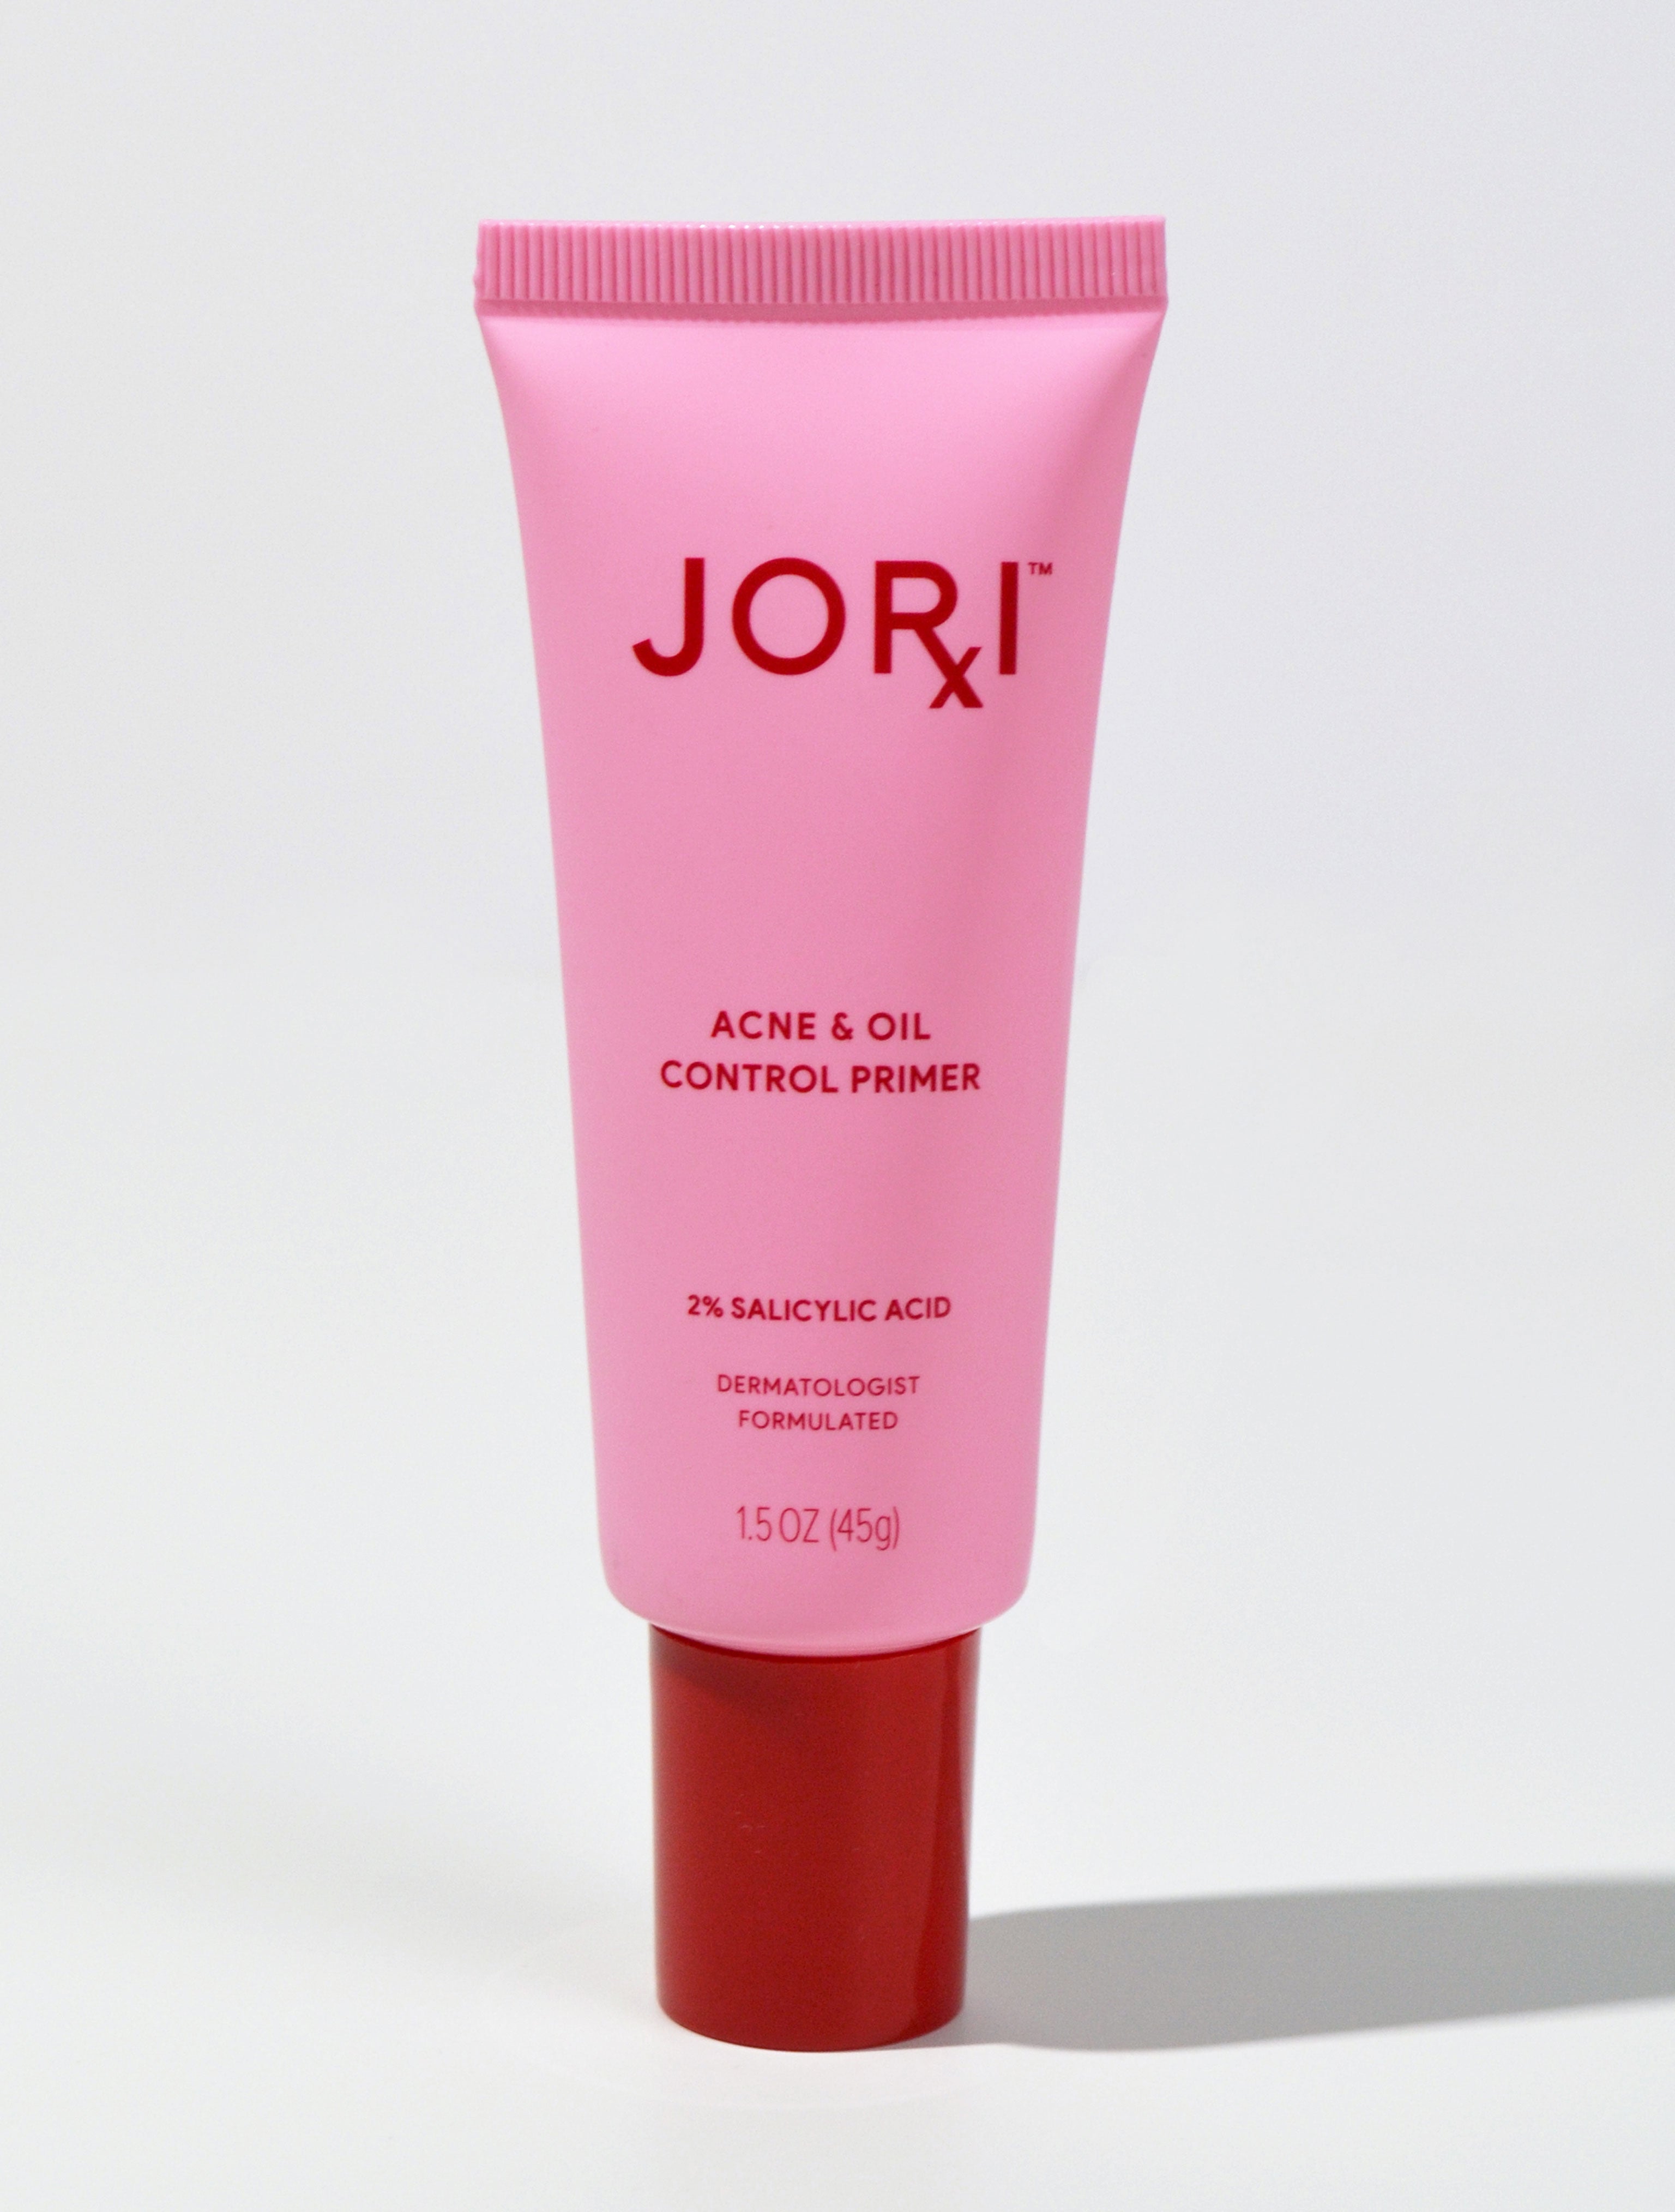 Pink and red bottle of Jori Primer